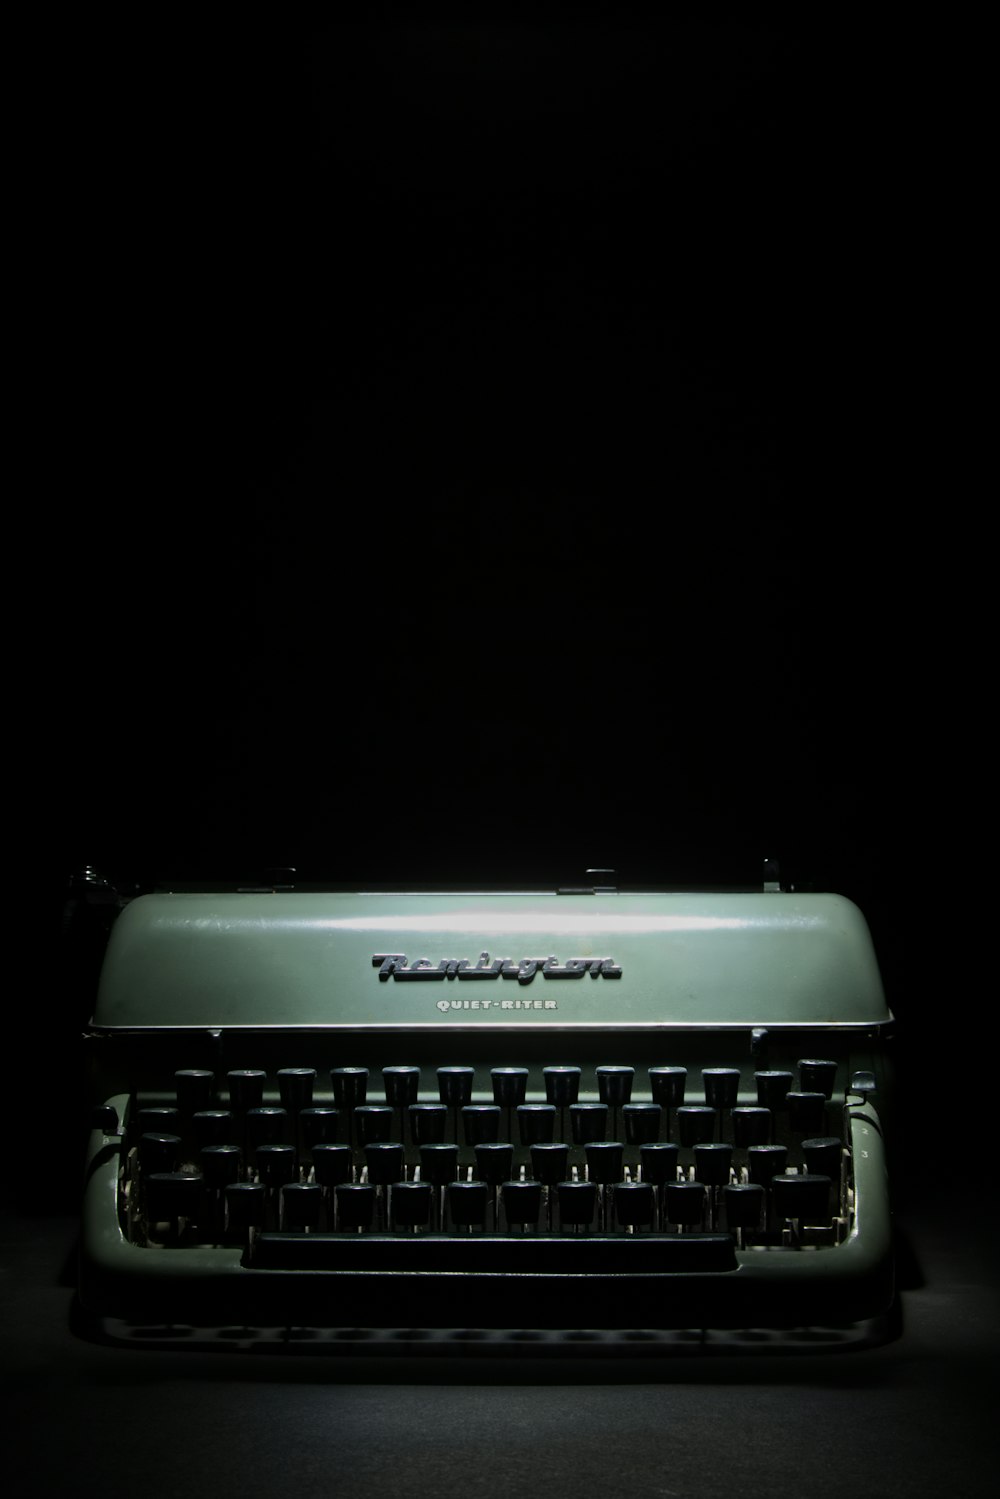 gray and black typewriter on black background